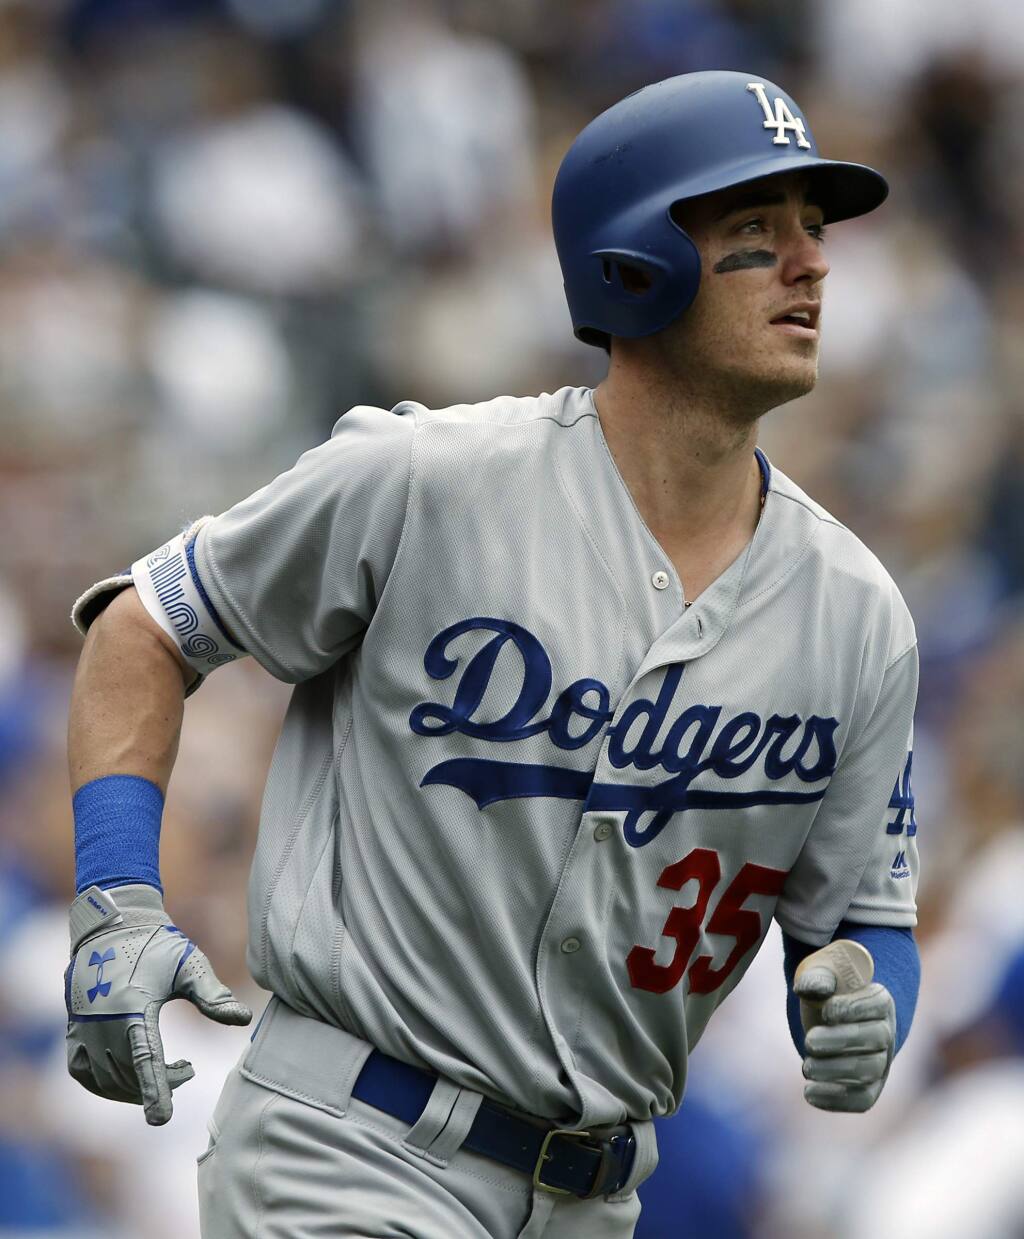 Yankees' Aaron Judge, Dodgers' Cody Bellinger unanimous picks as